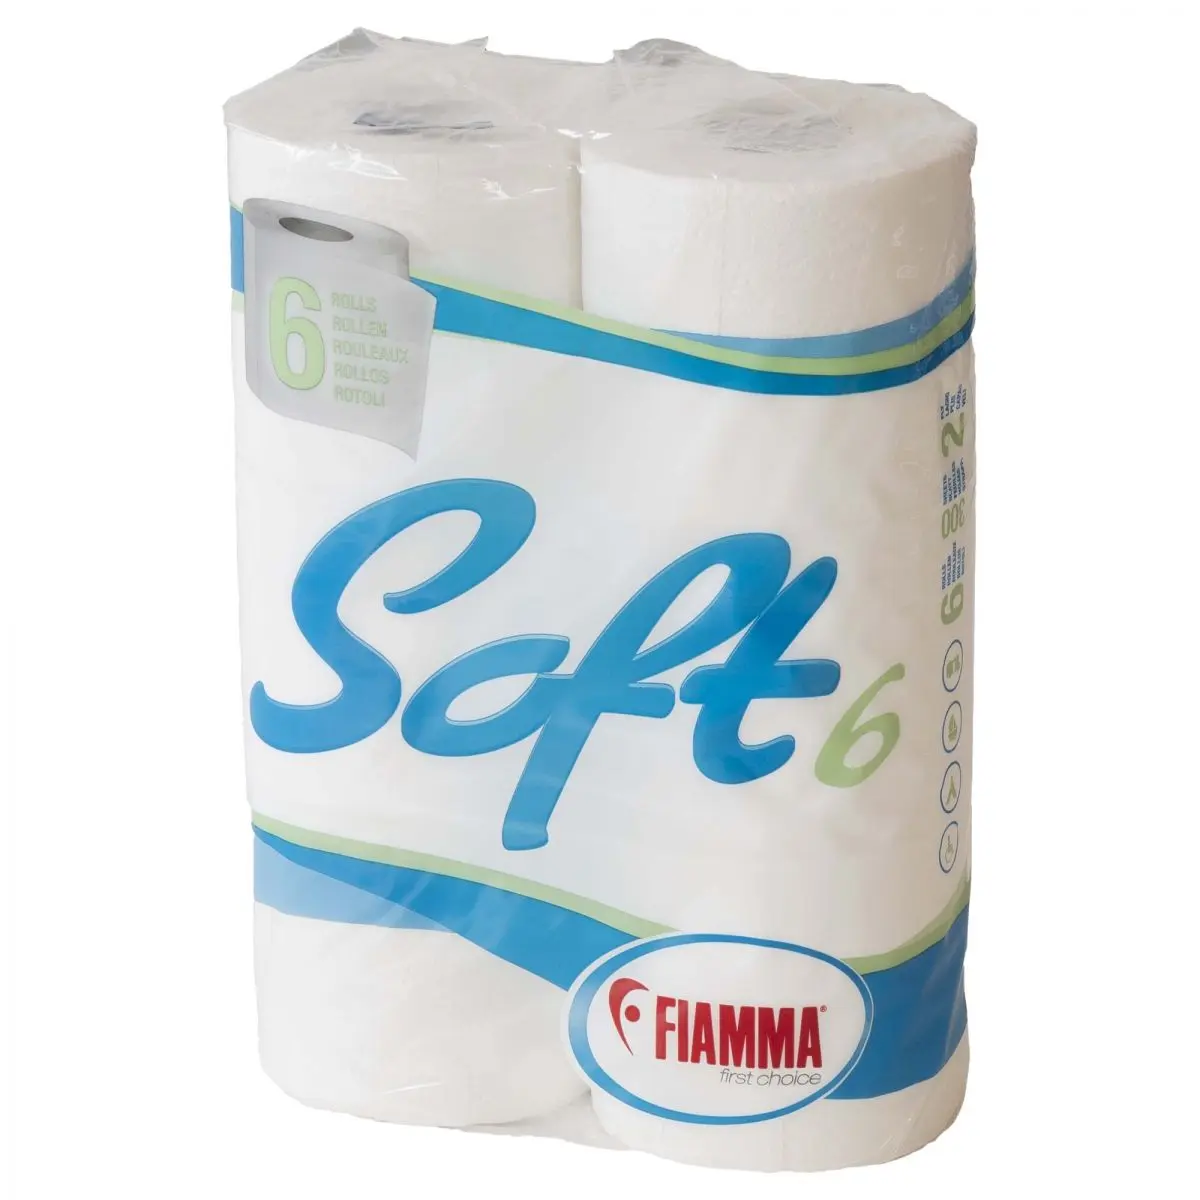 Fiamma Toaletný papier Soft 6 - 6 roliek